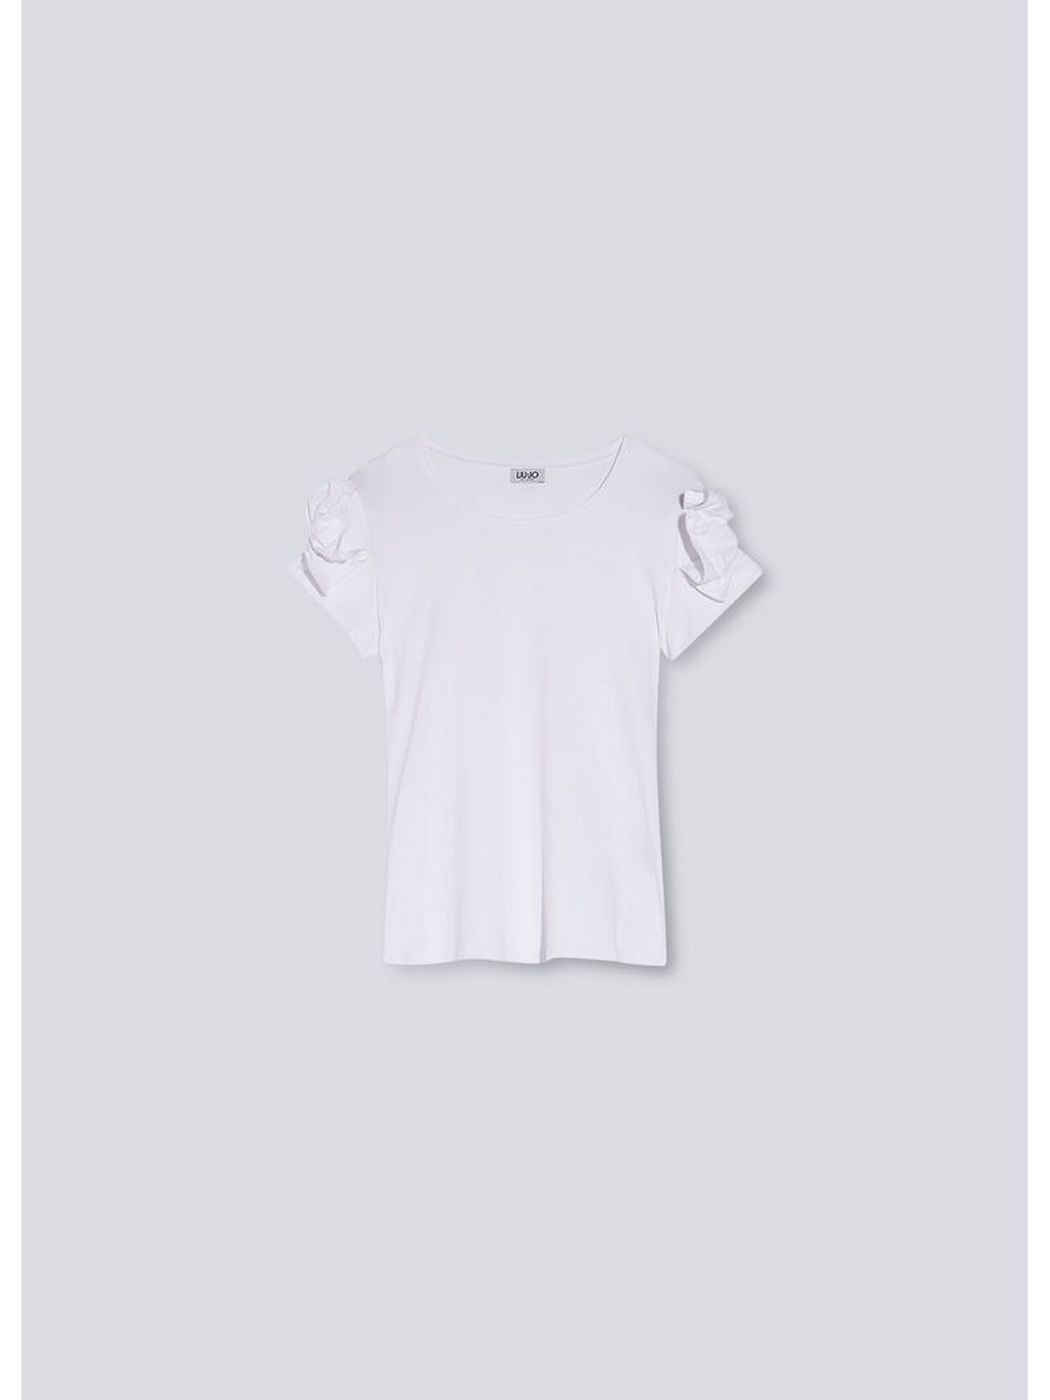 LIU JO FRESH T-Shirt e Polo Donna  JA2083 J5677 Bianco